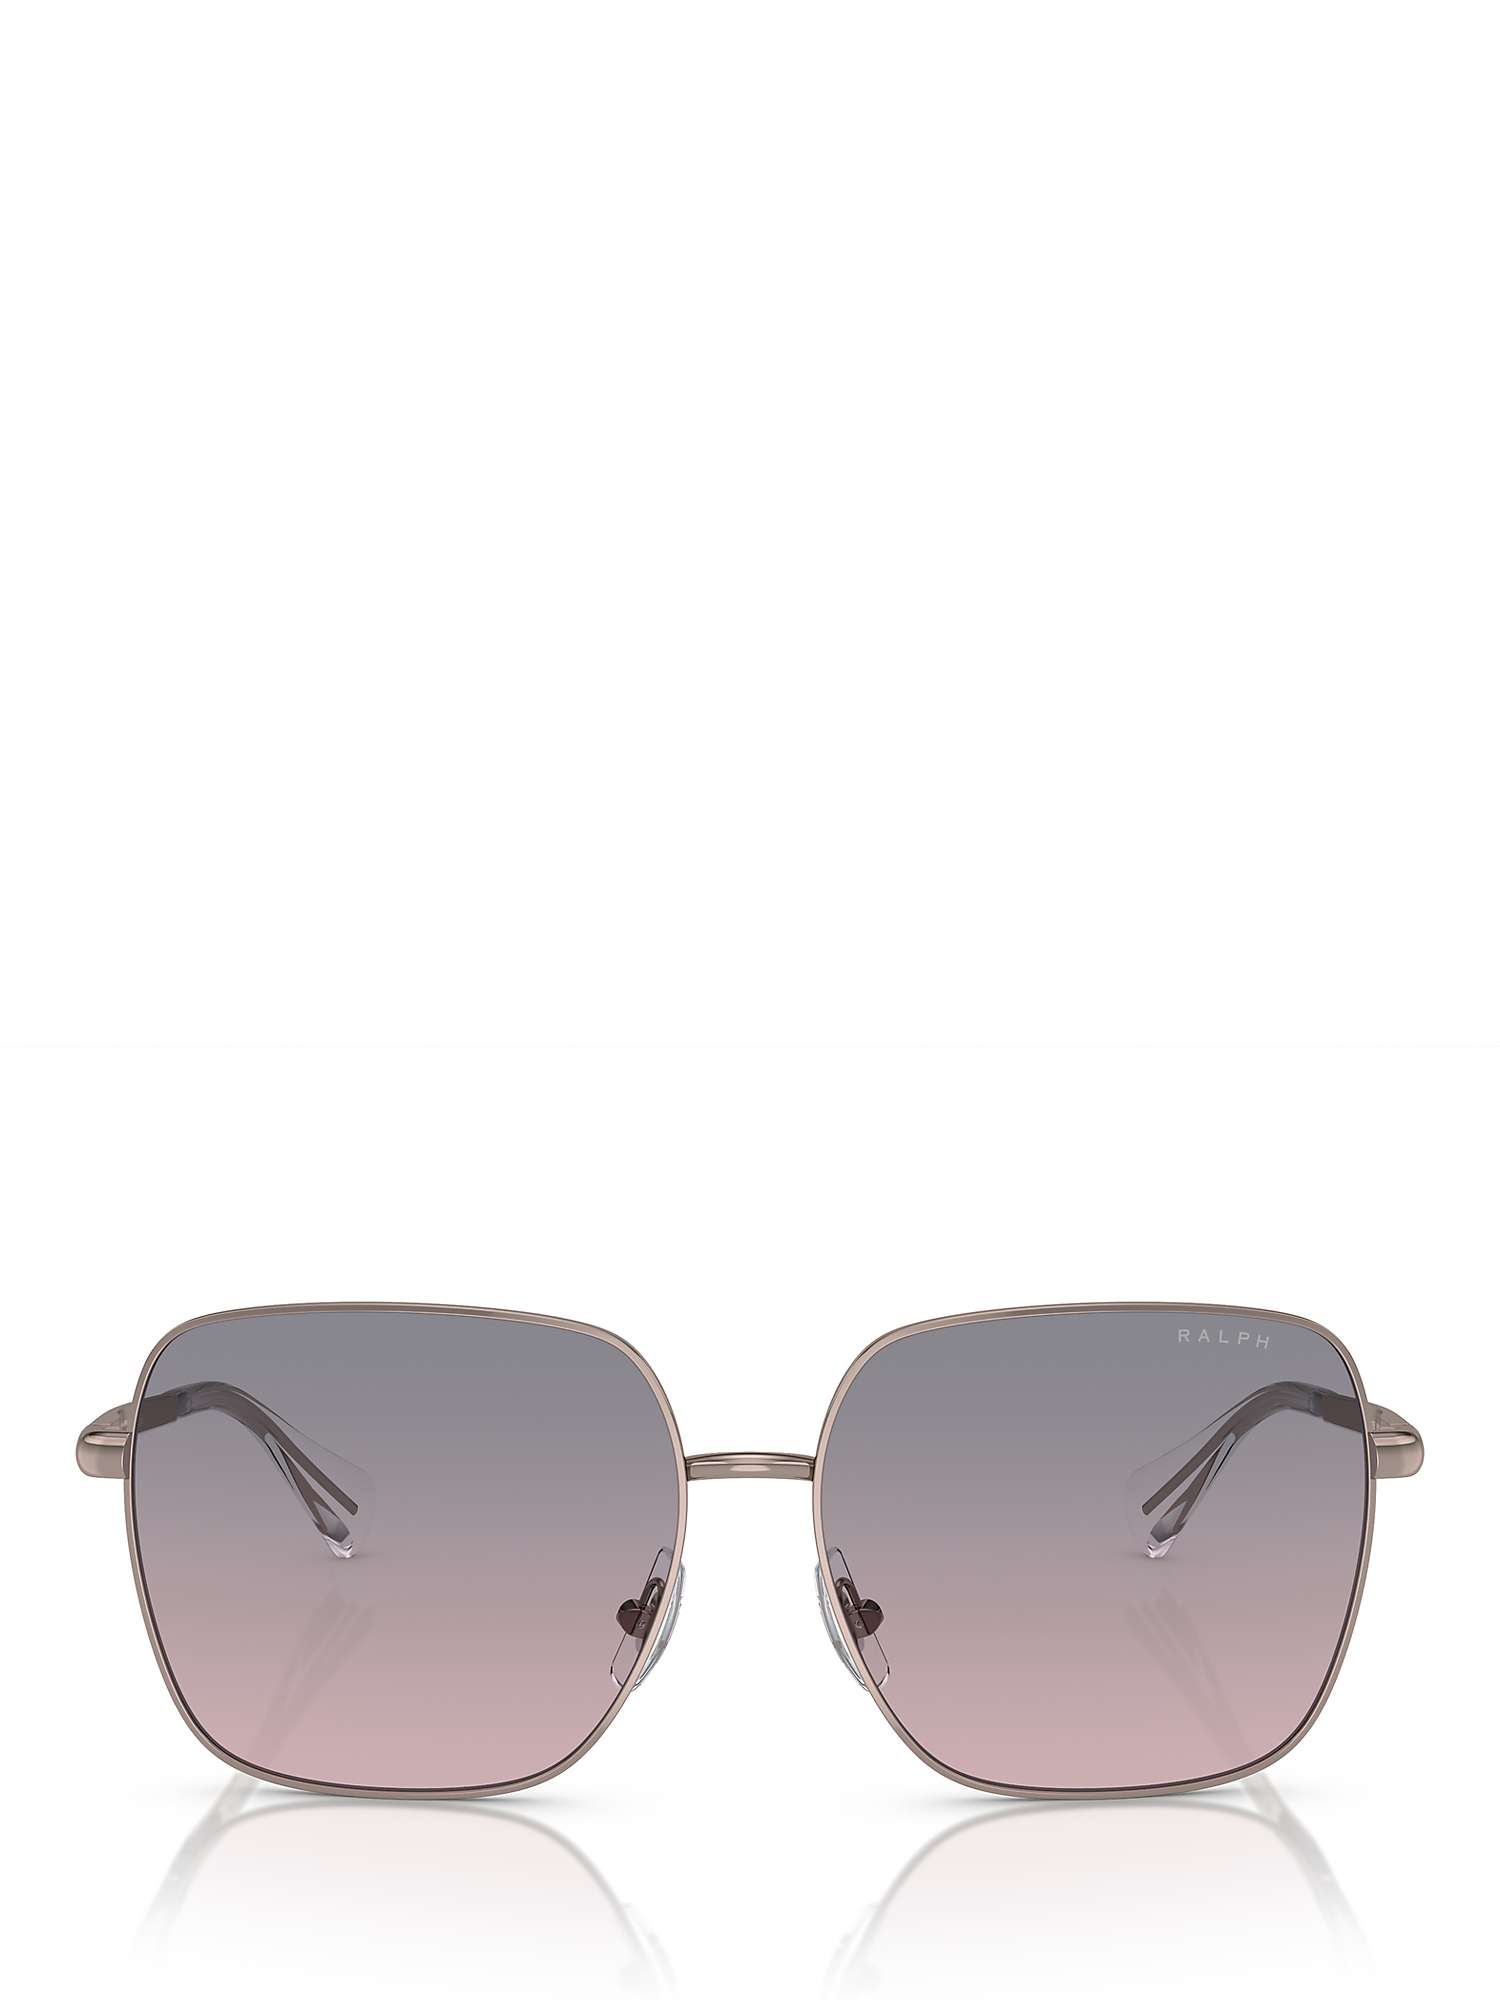 Buy Ralph RA4142 Women's Square Sunglasses, Shiny Rose Gold Online at johnlewis.com